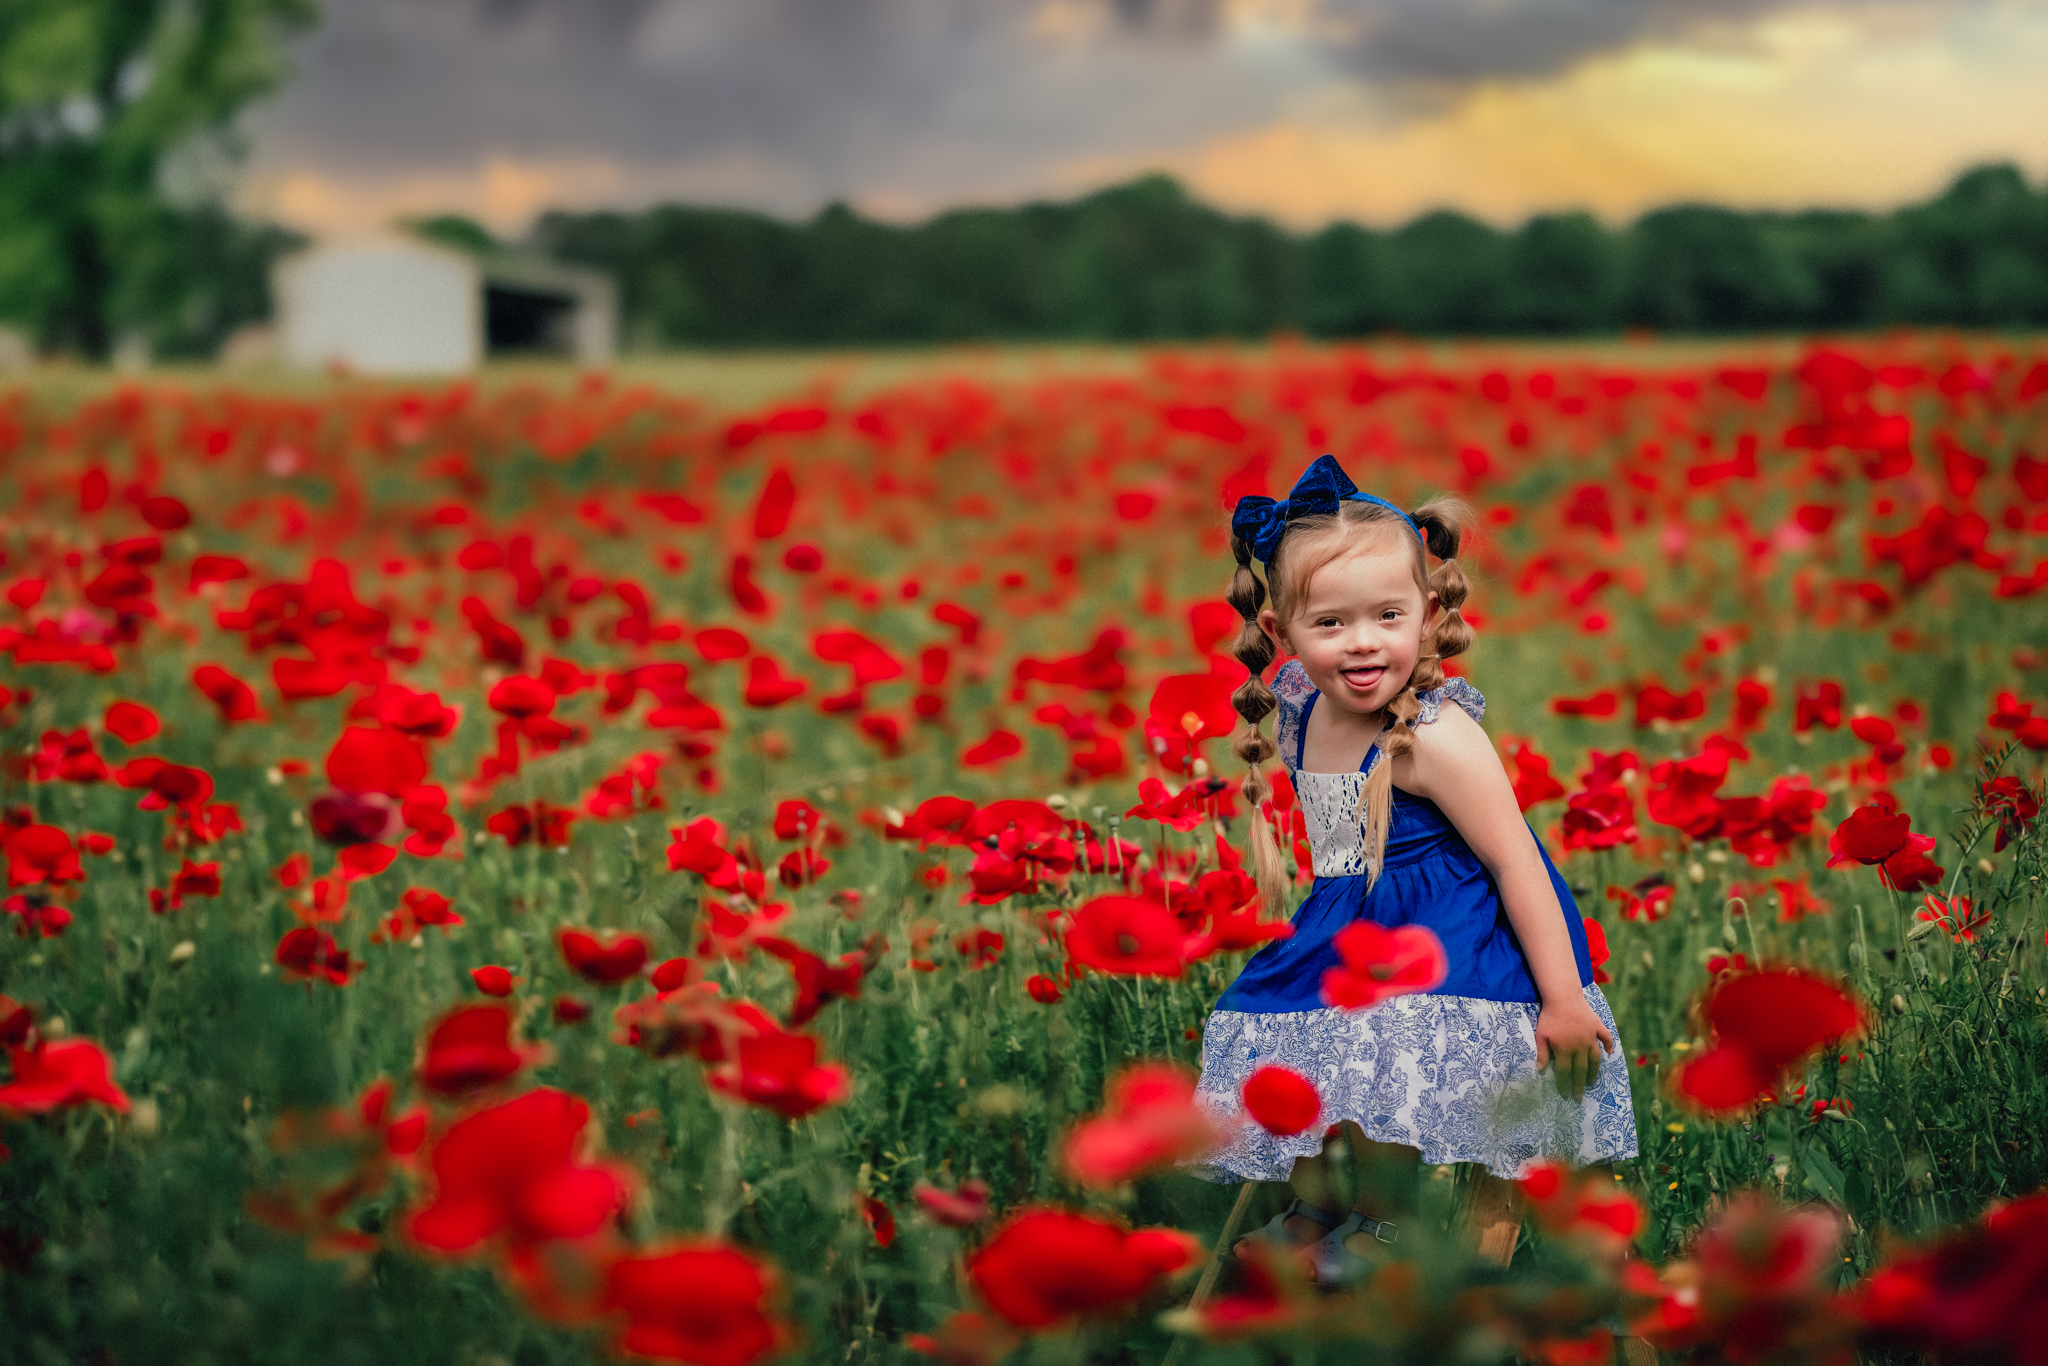 Toddler girl wearing a blue dress in red poppy flowers